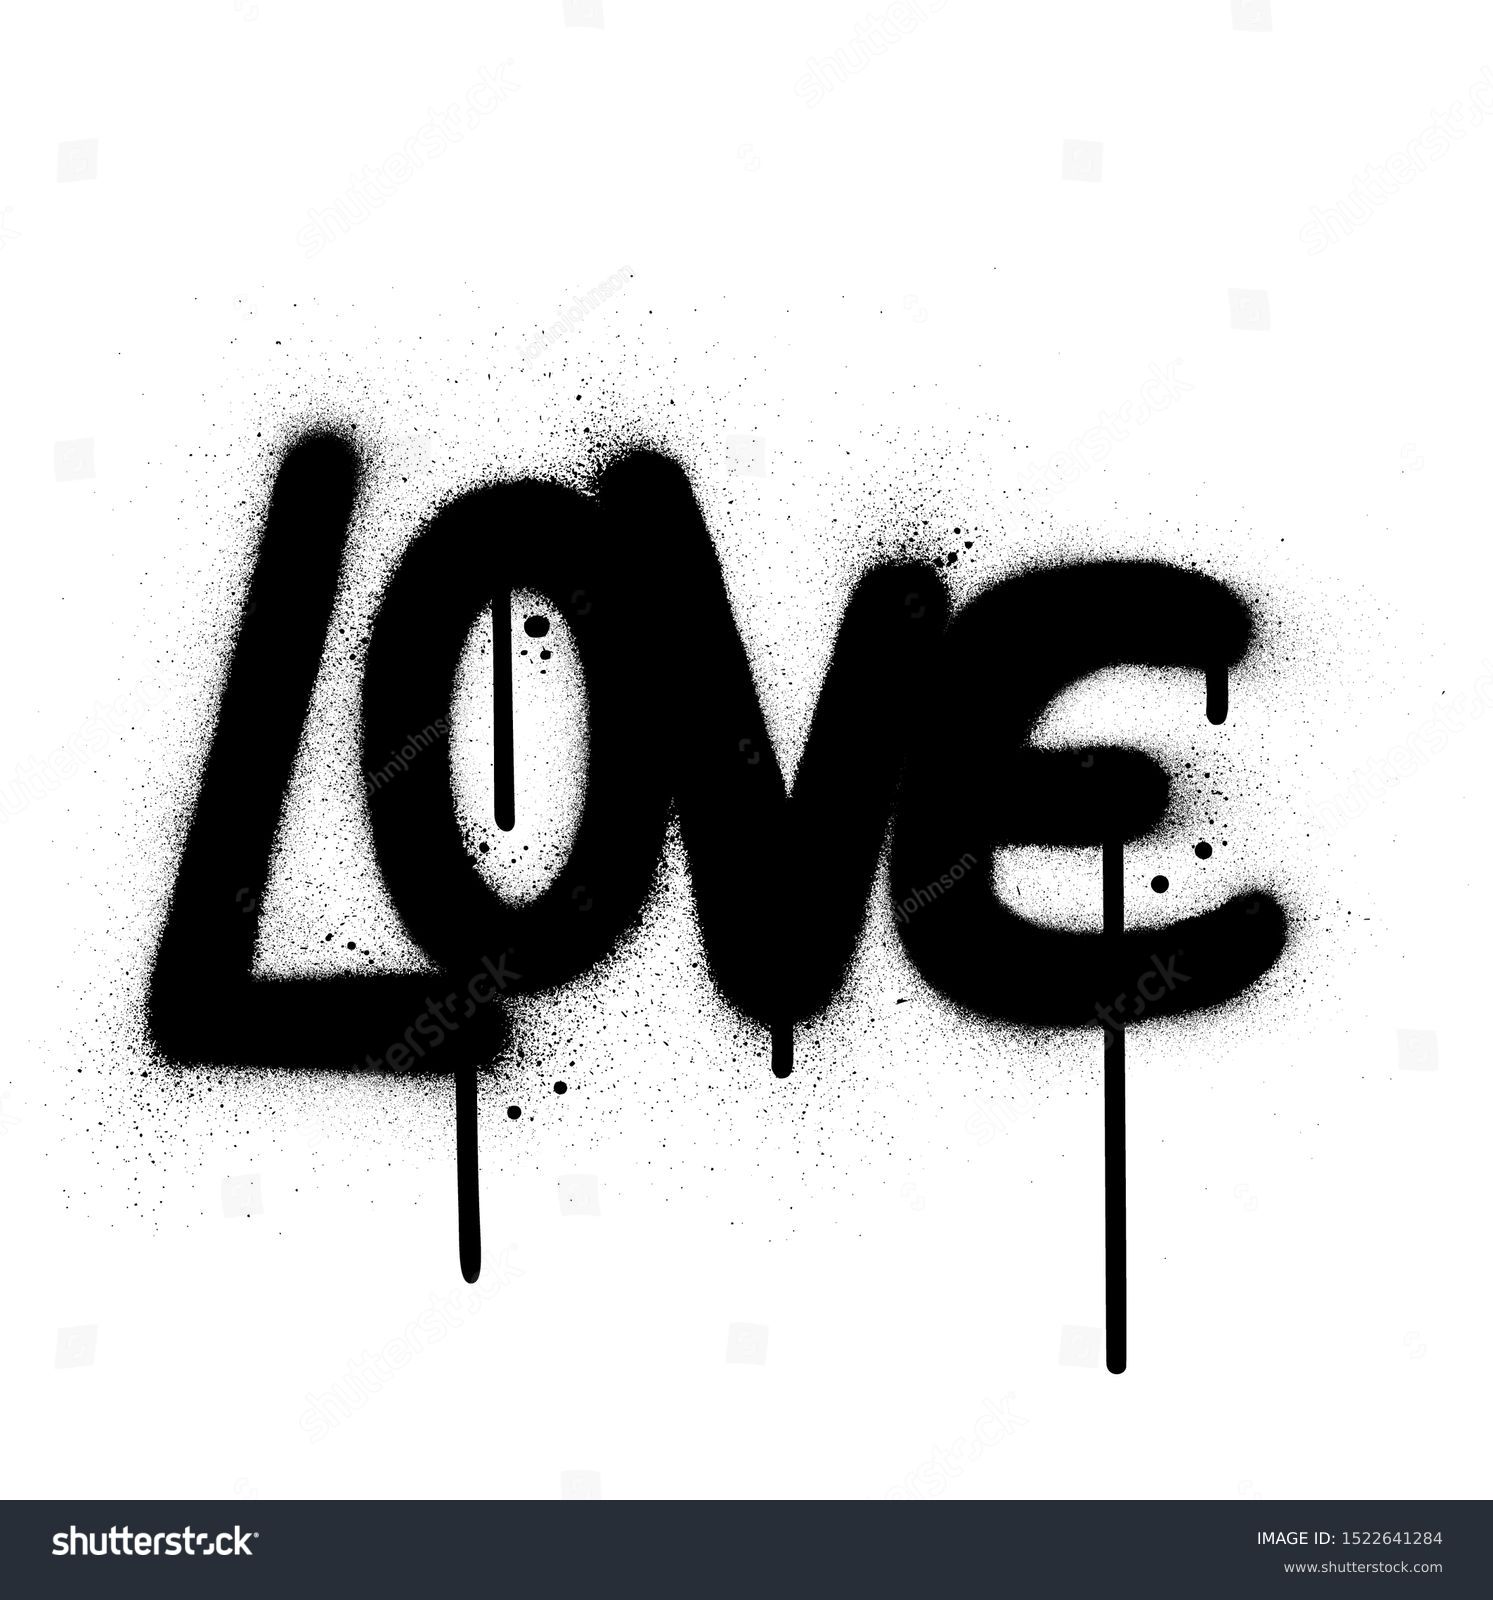 SVG of graffiti love word sprayed in black over white svg